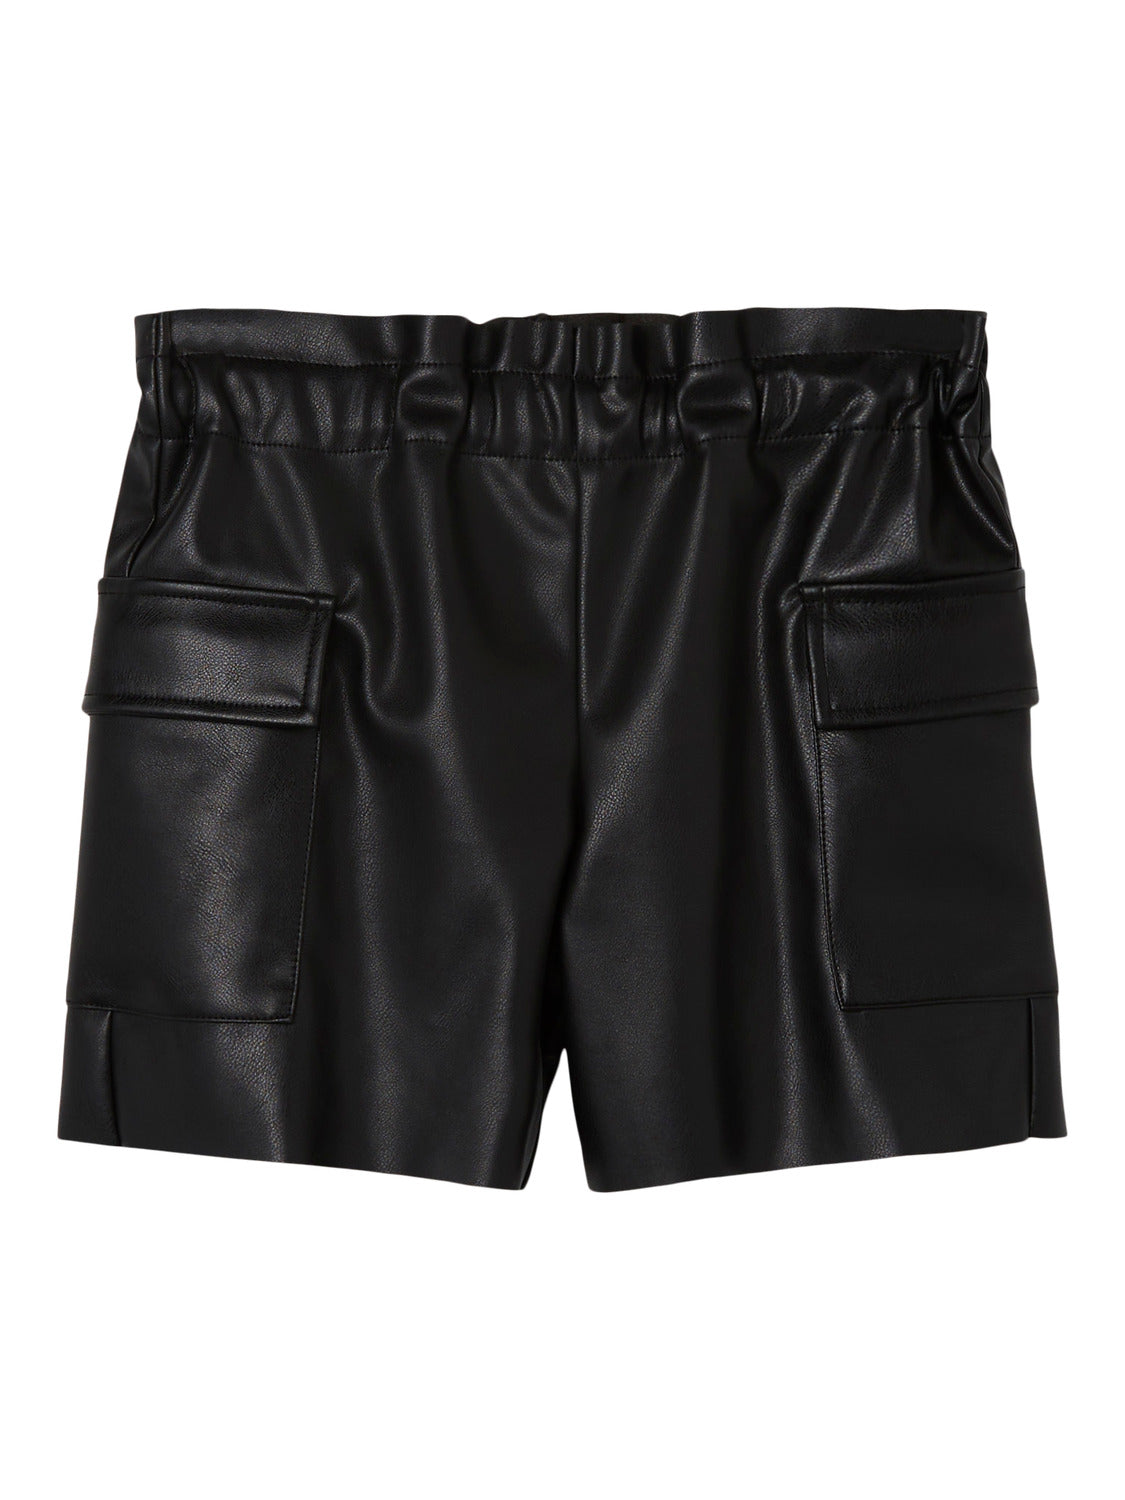 NKFNARUBI Shorts - Black